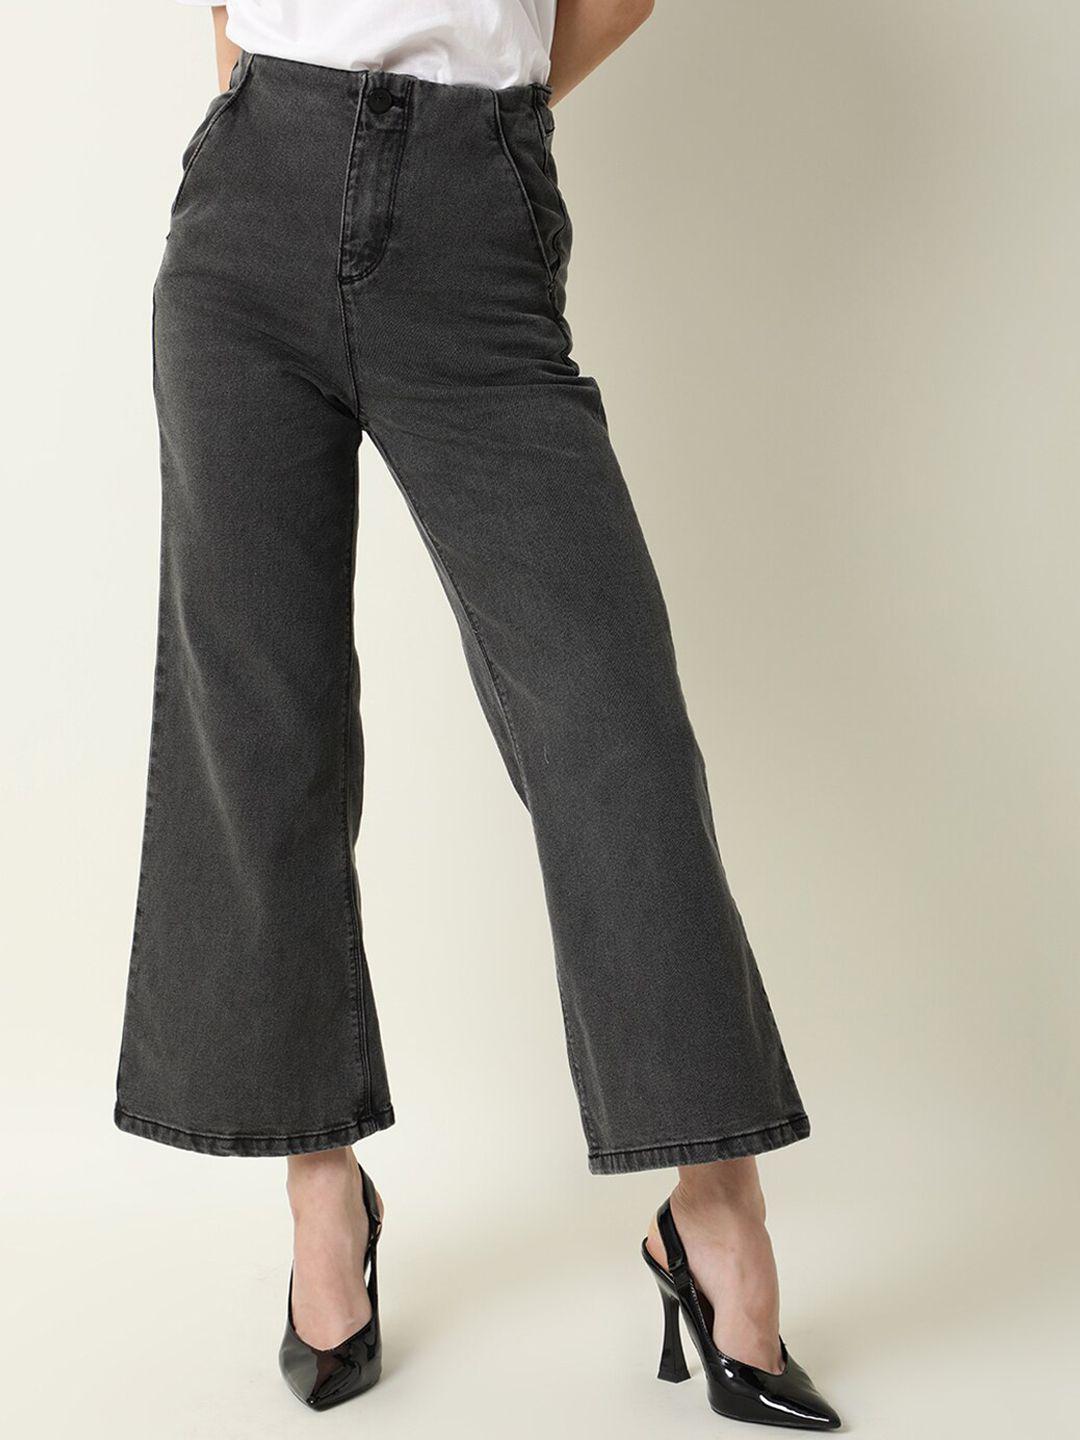 rareism women black high-rise jeans